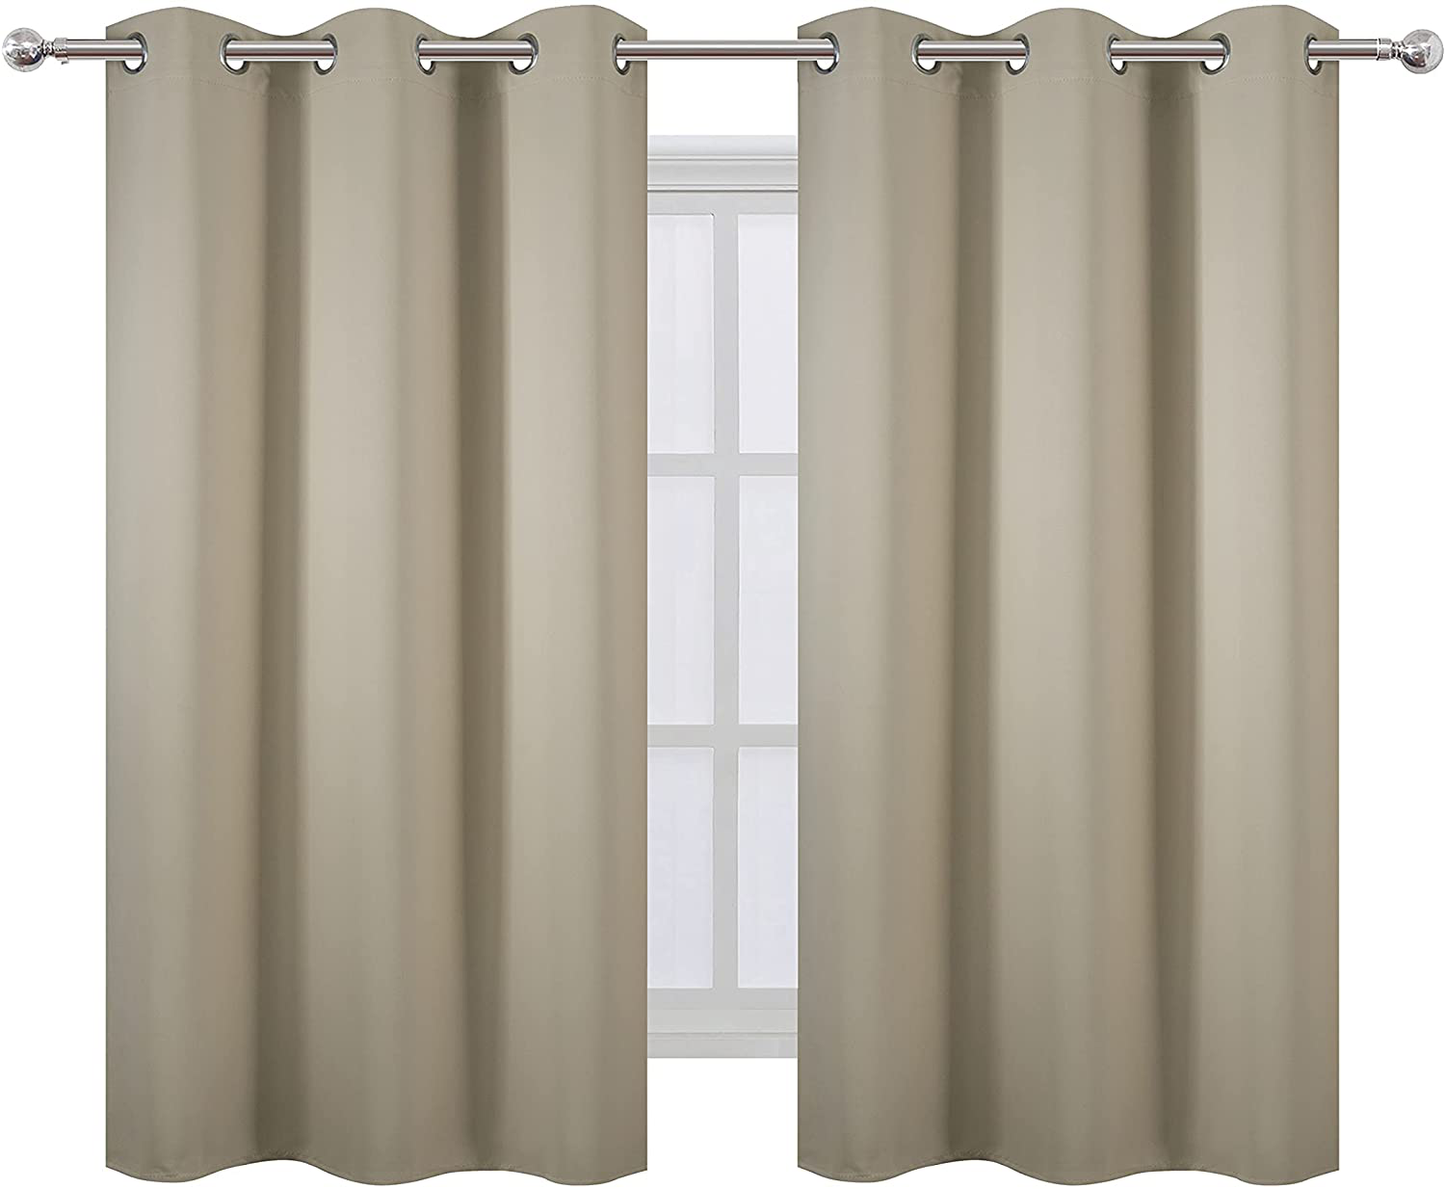 LEMOMO Navy Blue Blackout Curtains 52 x 84 inch/Set of 2 Curtain Panels Room Darkening Bedroom Curtains